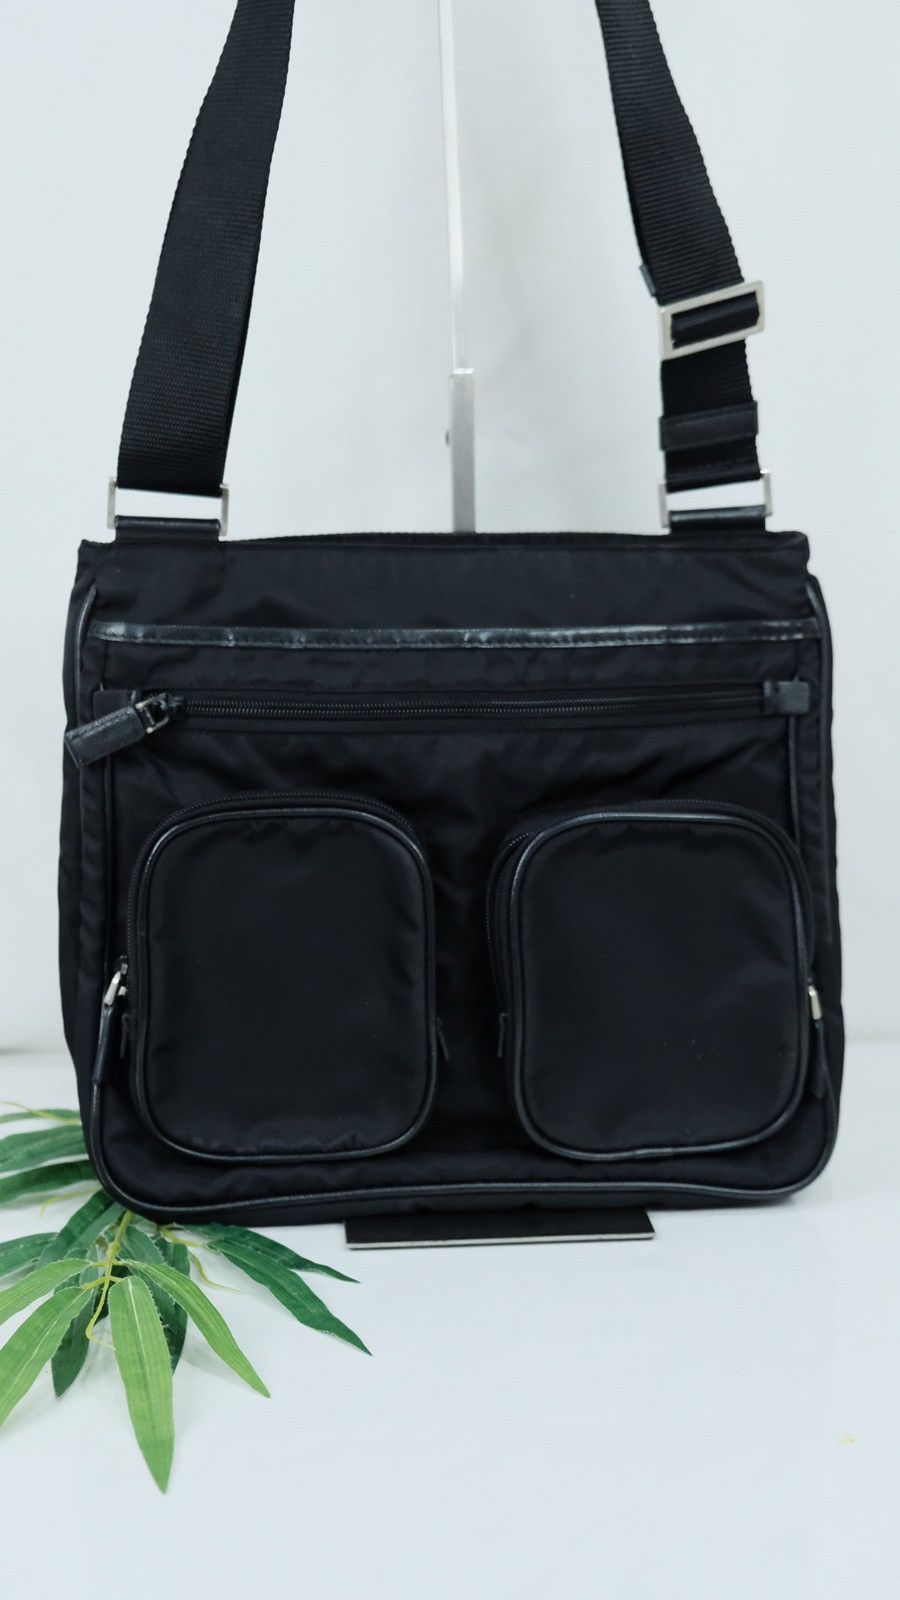 Authentic prada sling bag black nylon - 2